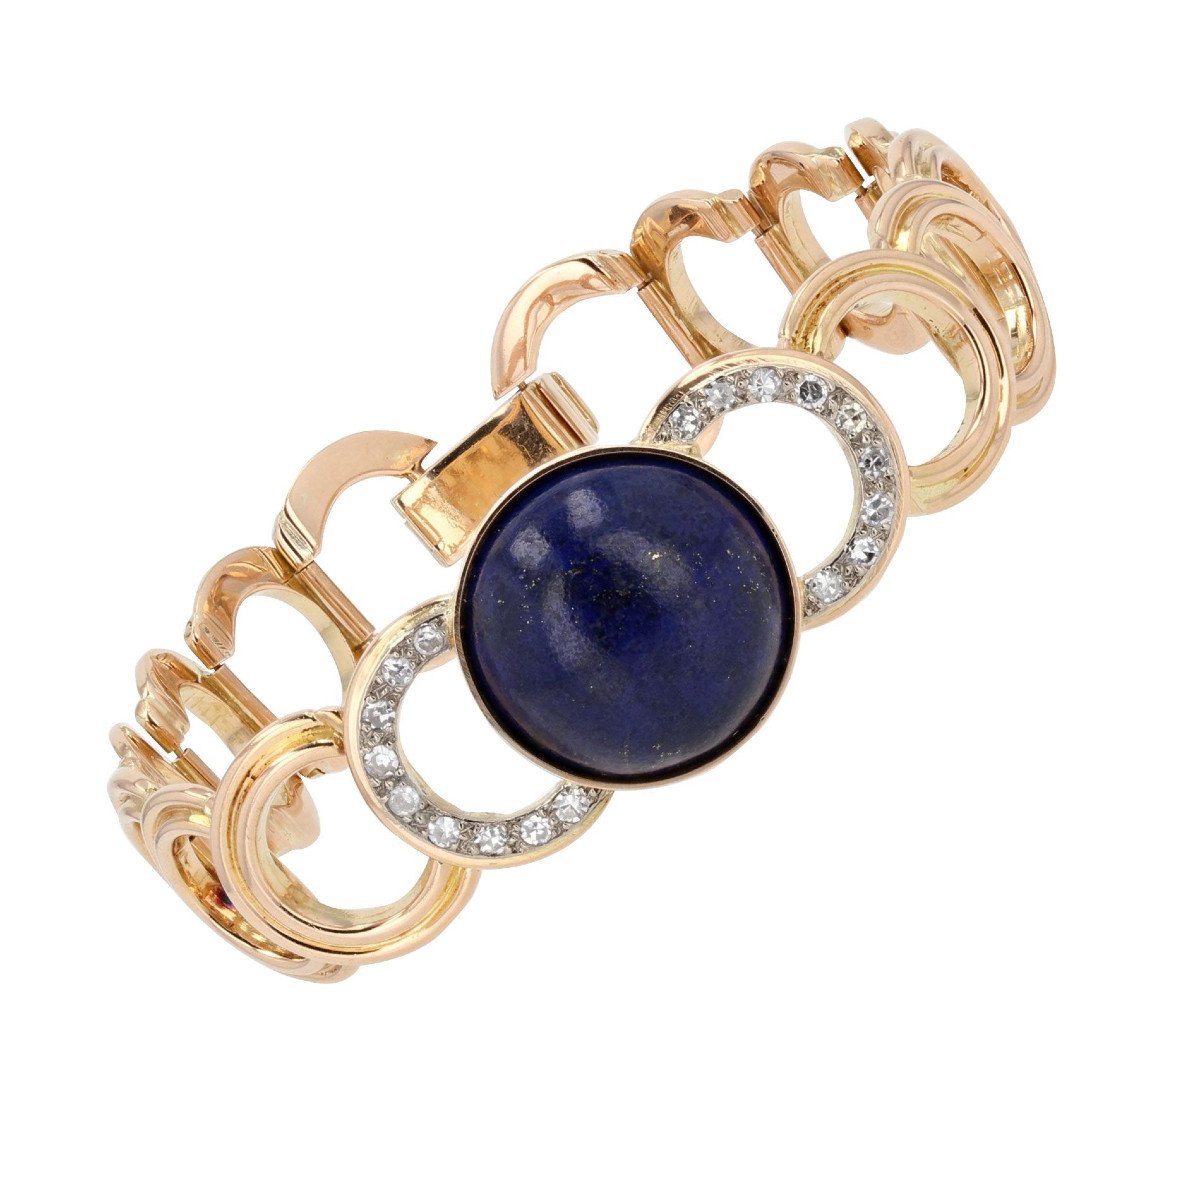 Gold Bracelet With Diamonds And Its Lapis Lazuli Cabochon